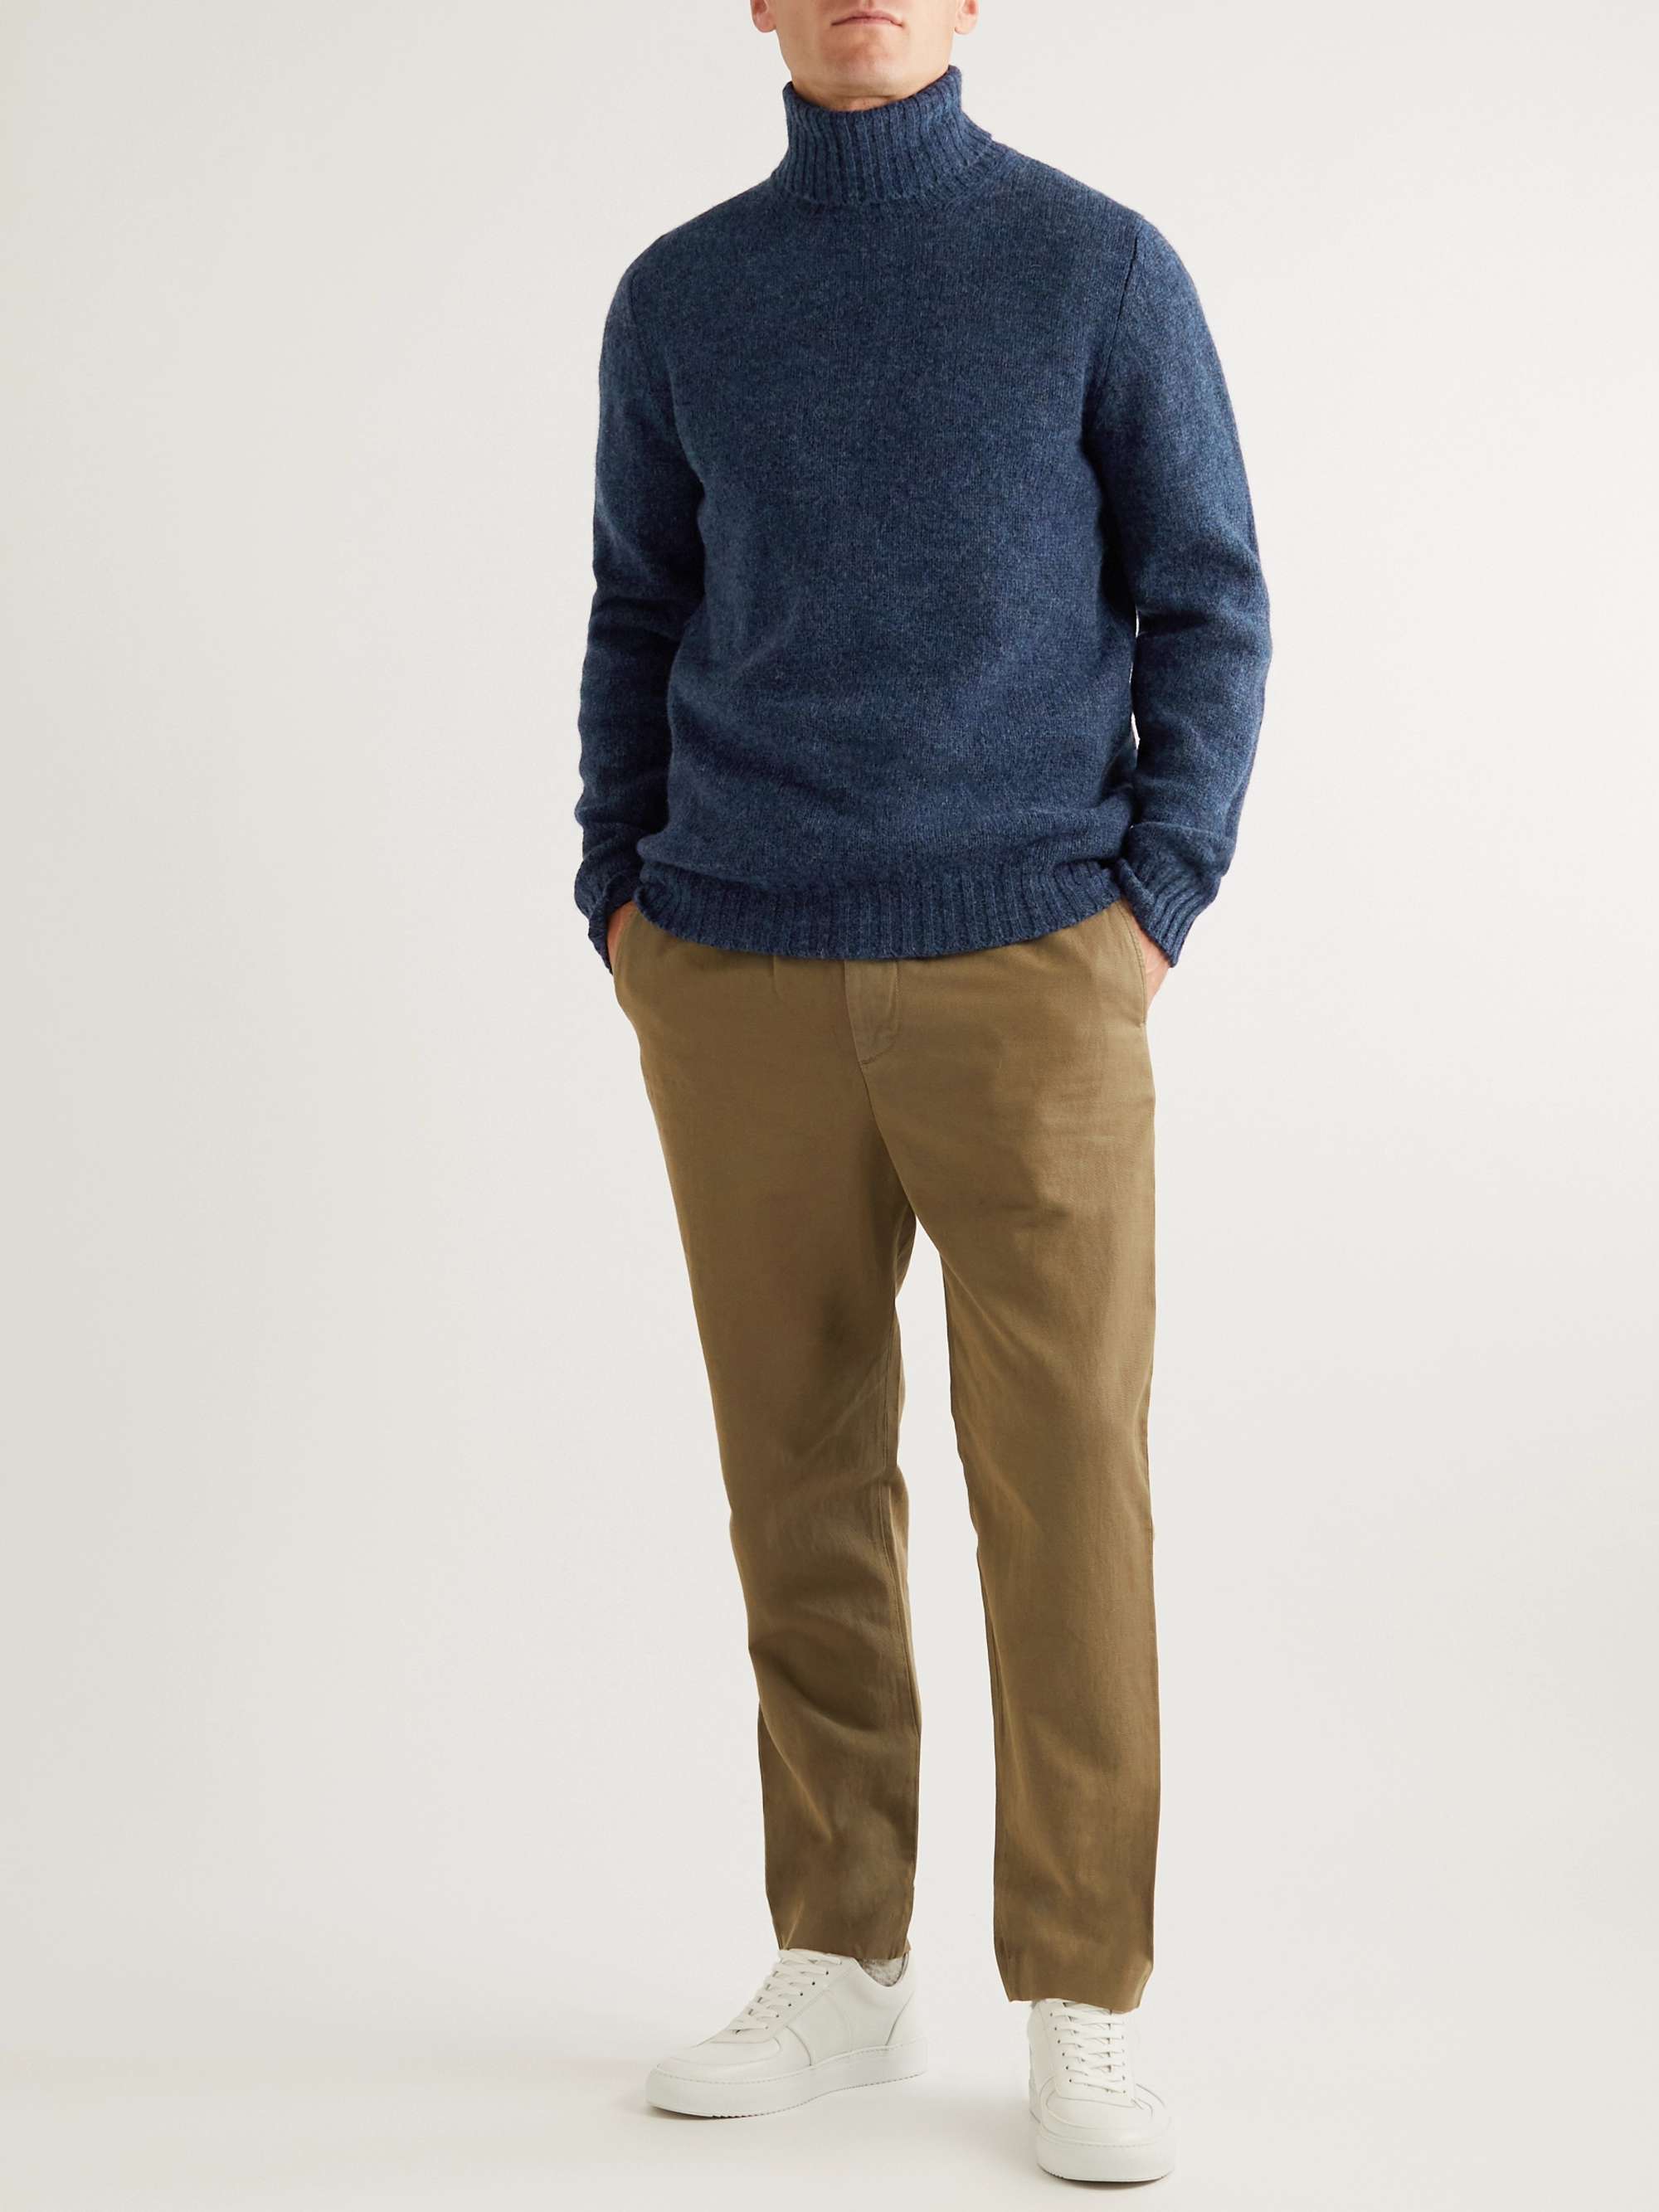 WILLIAM LOCKIE Shetland Wool Sweater for Men | MR PORTER